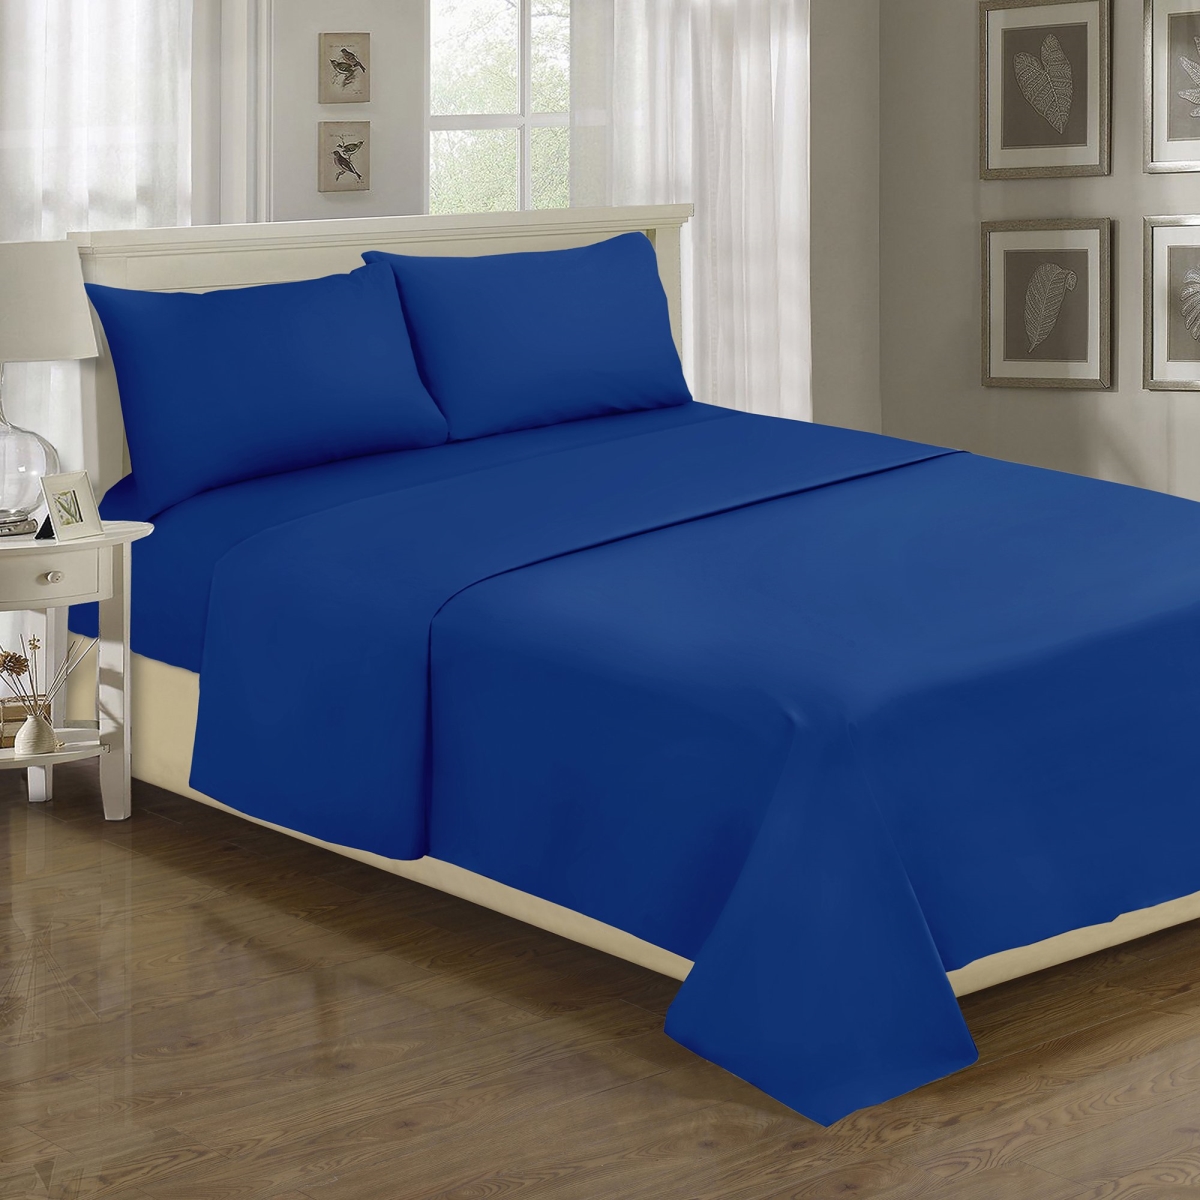 Millano Spa 1200tc Sheet Set, Blue - King Size